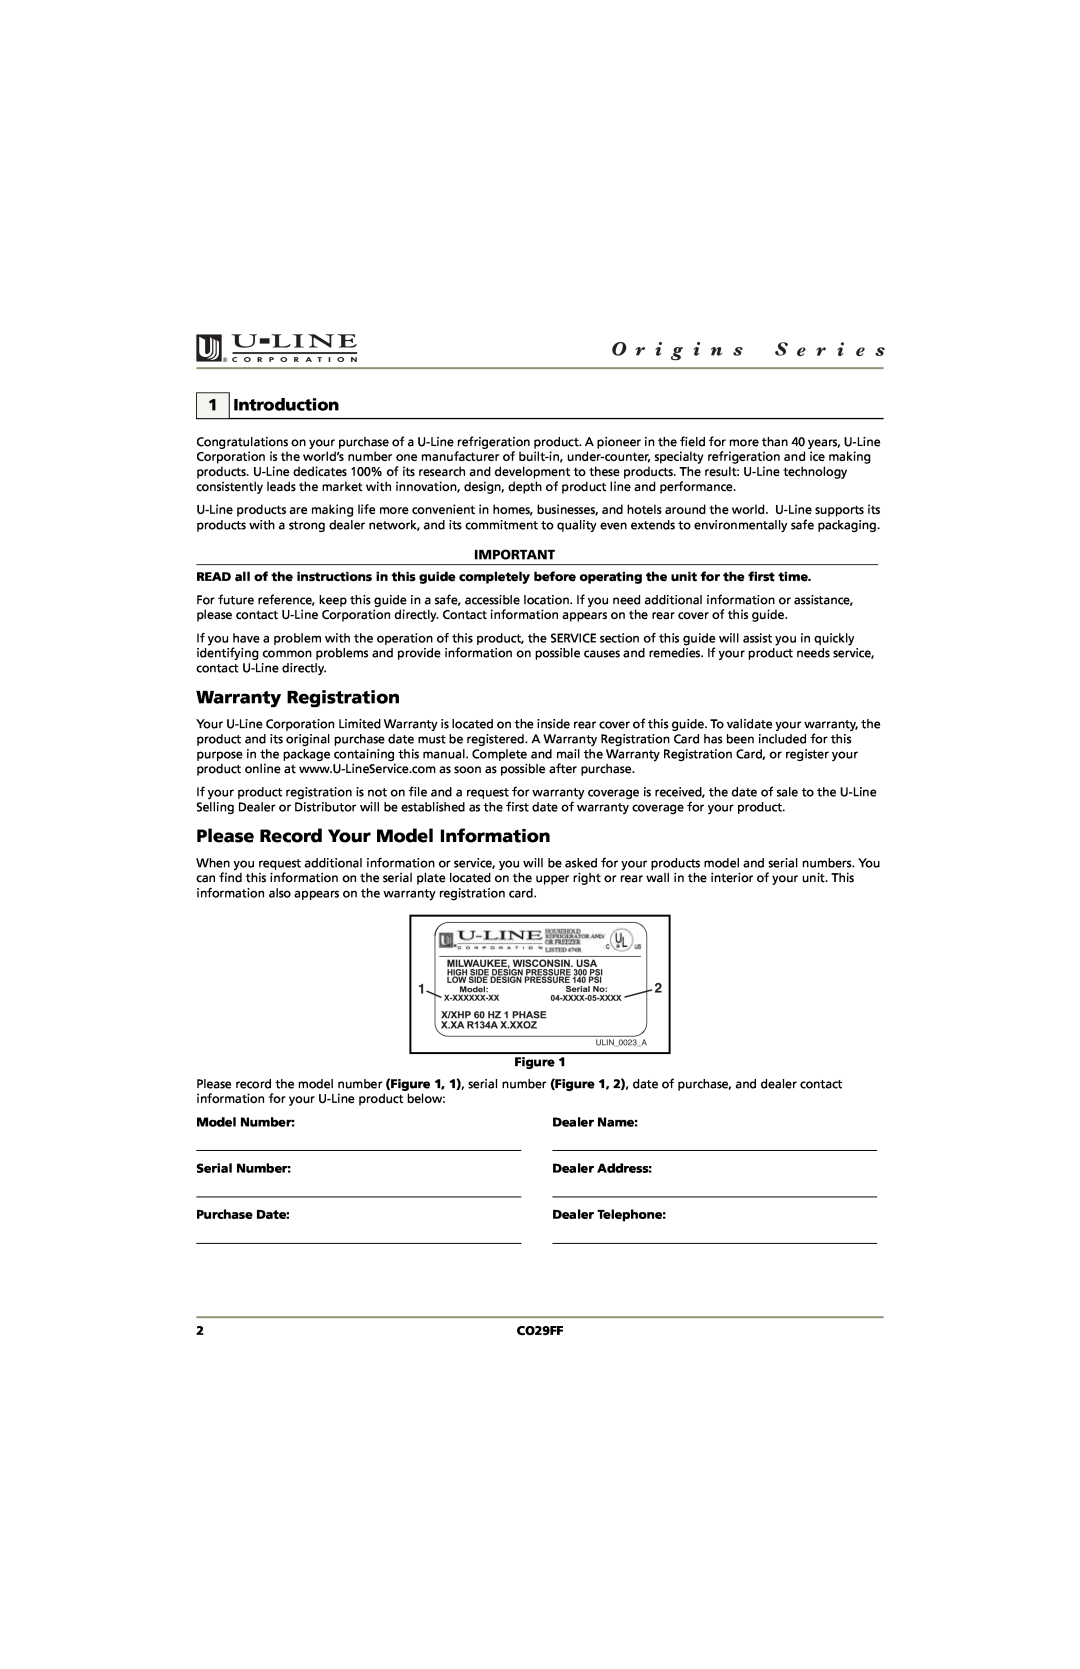 U-Line CO29FF manual Warranty Registration, Please Record Your Model Information, Introduction 